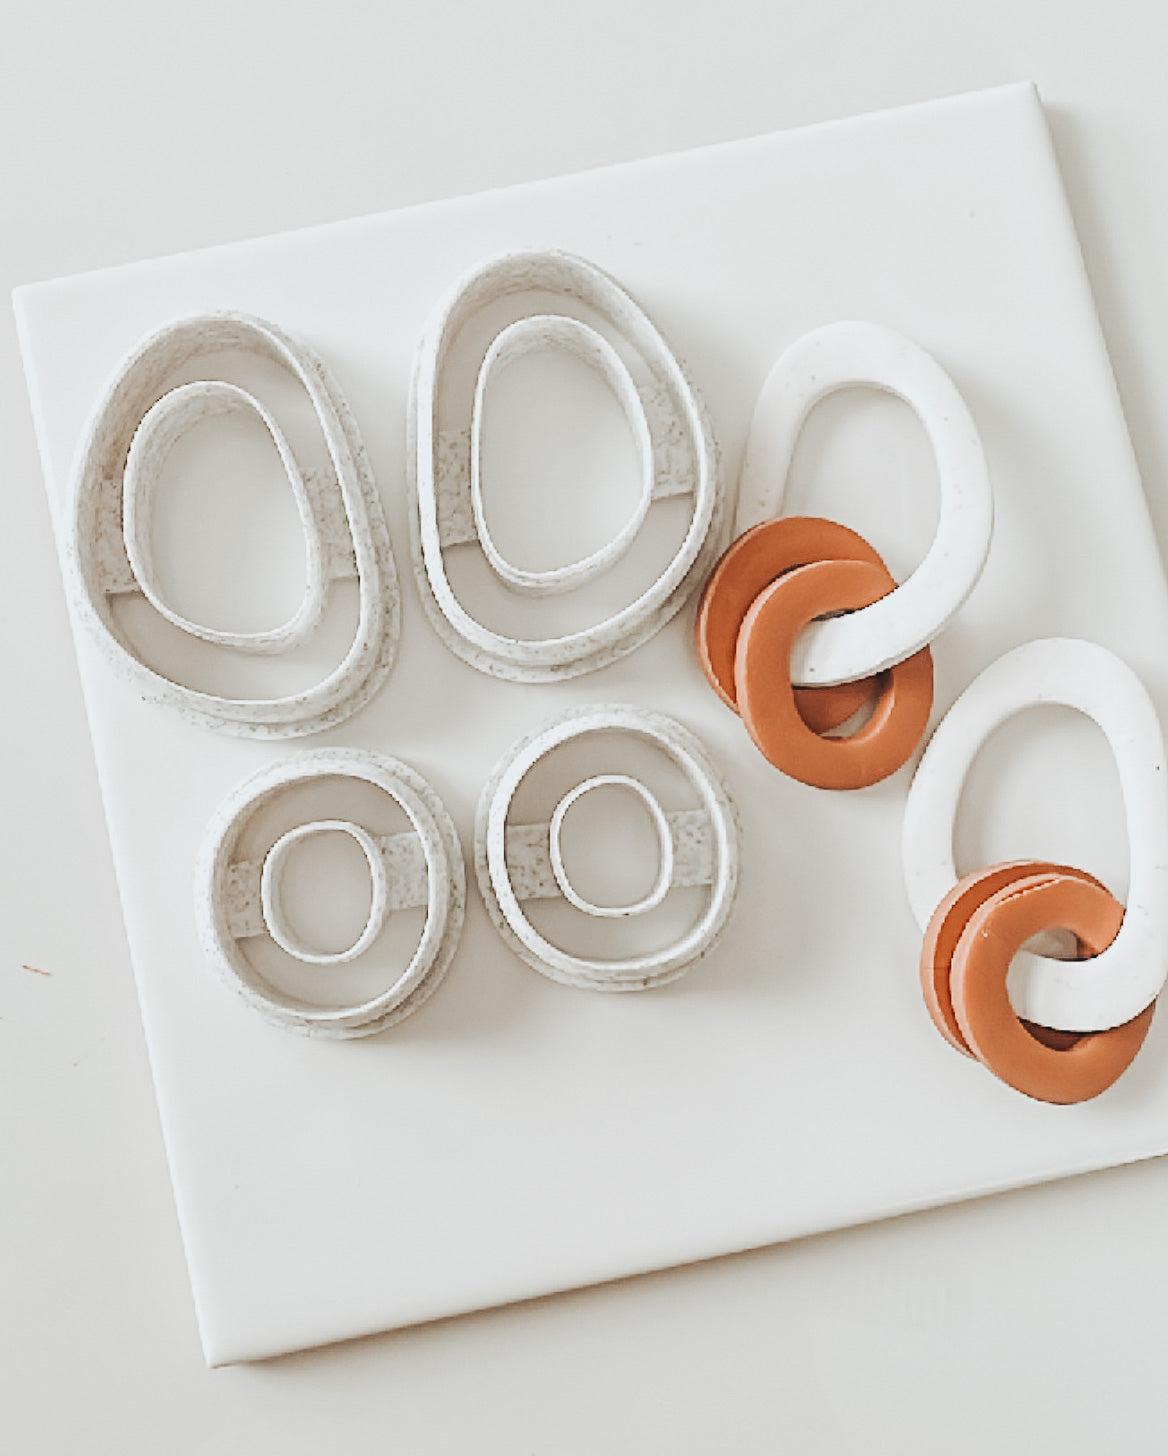 Zara Mirrored Organic Link Clay Cutters (set of 4)